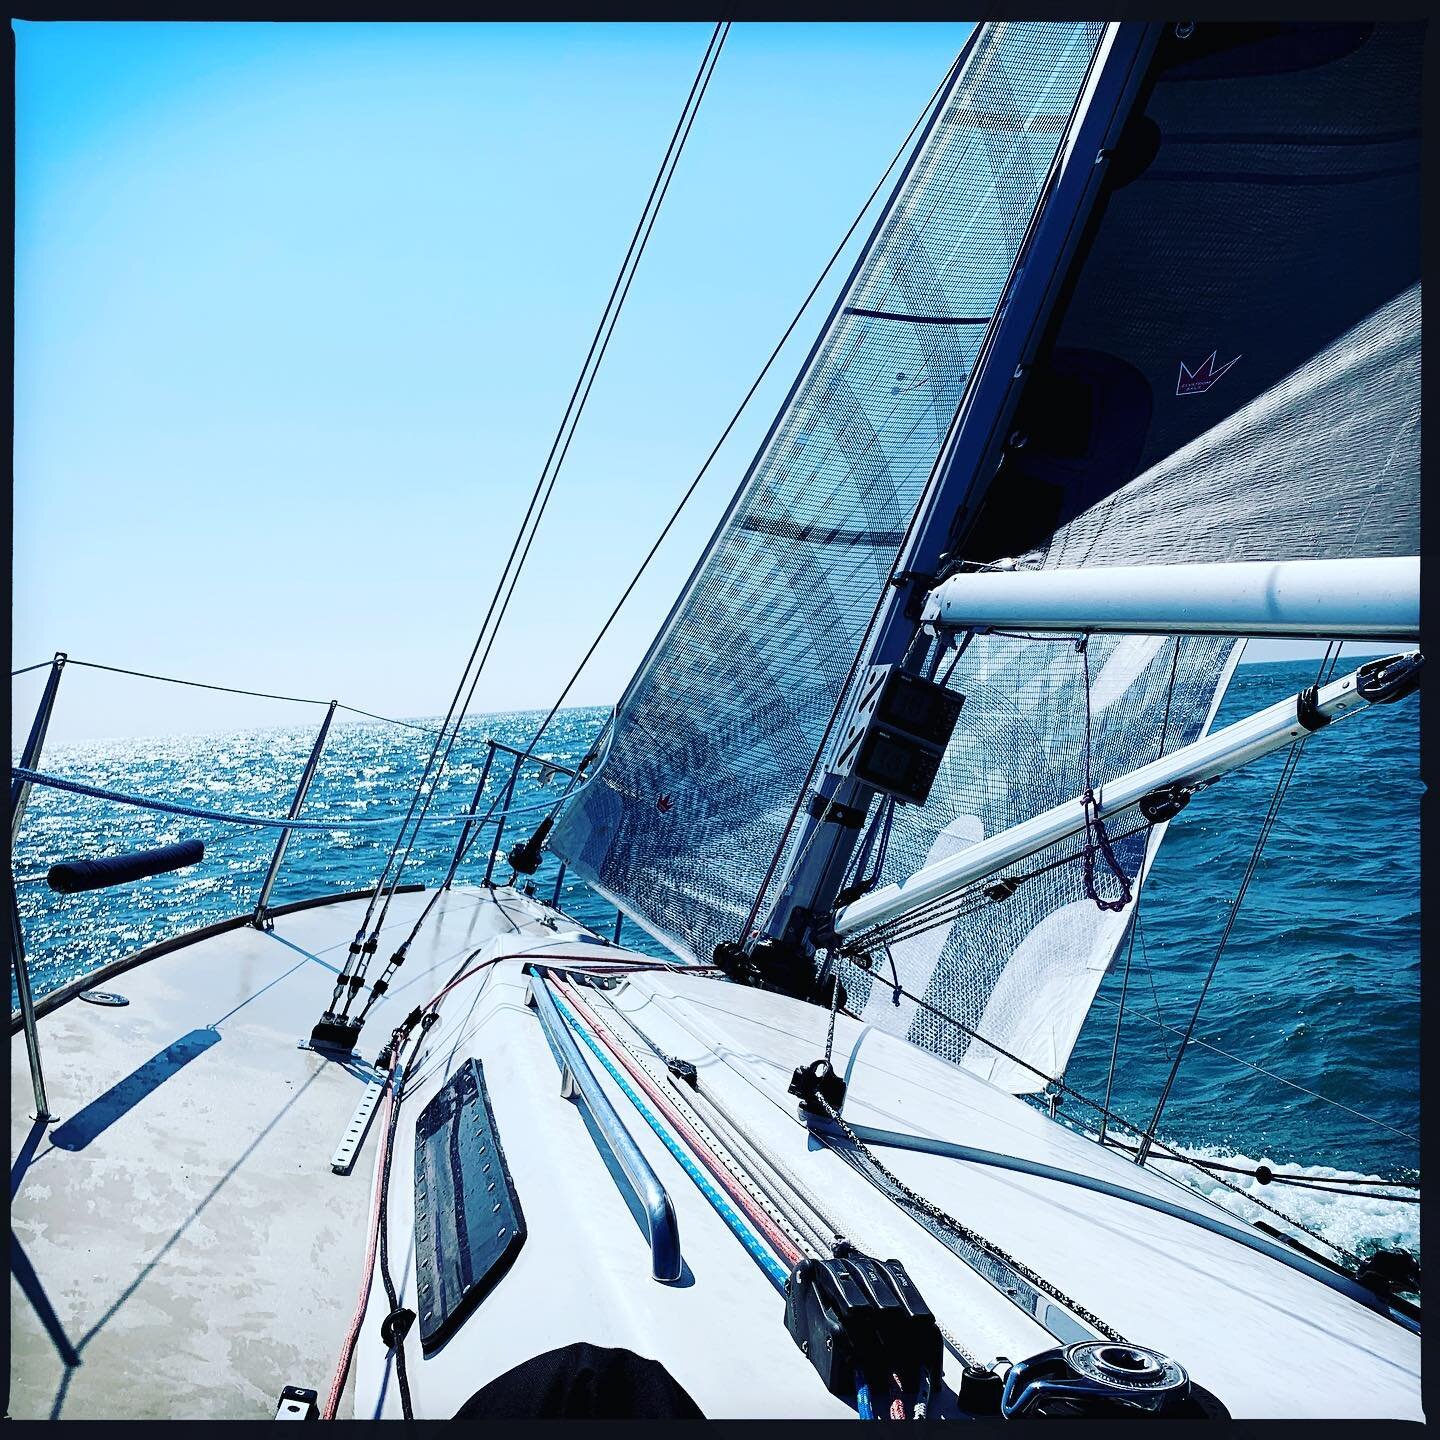 Glam day for a sail round the IOW #j92 #essc #elvstromsails #iow